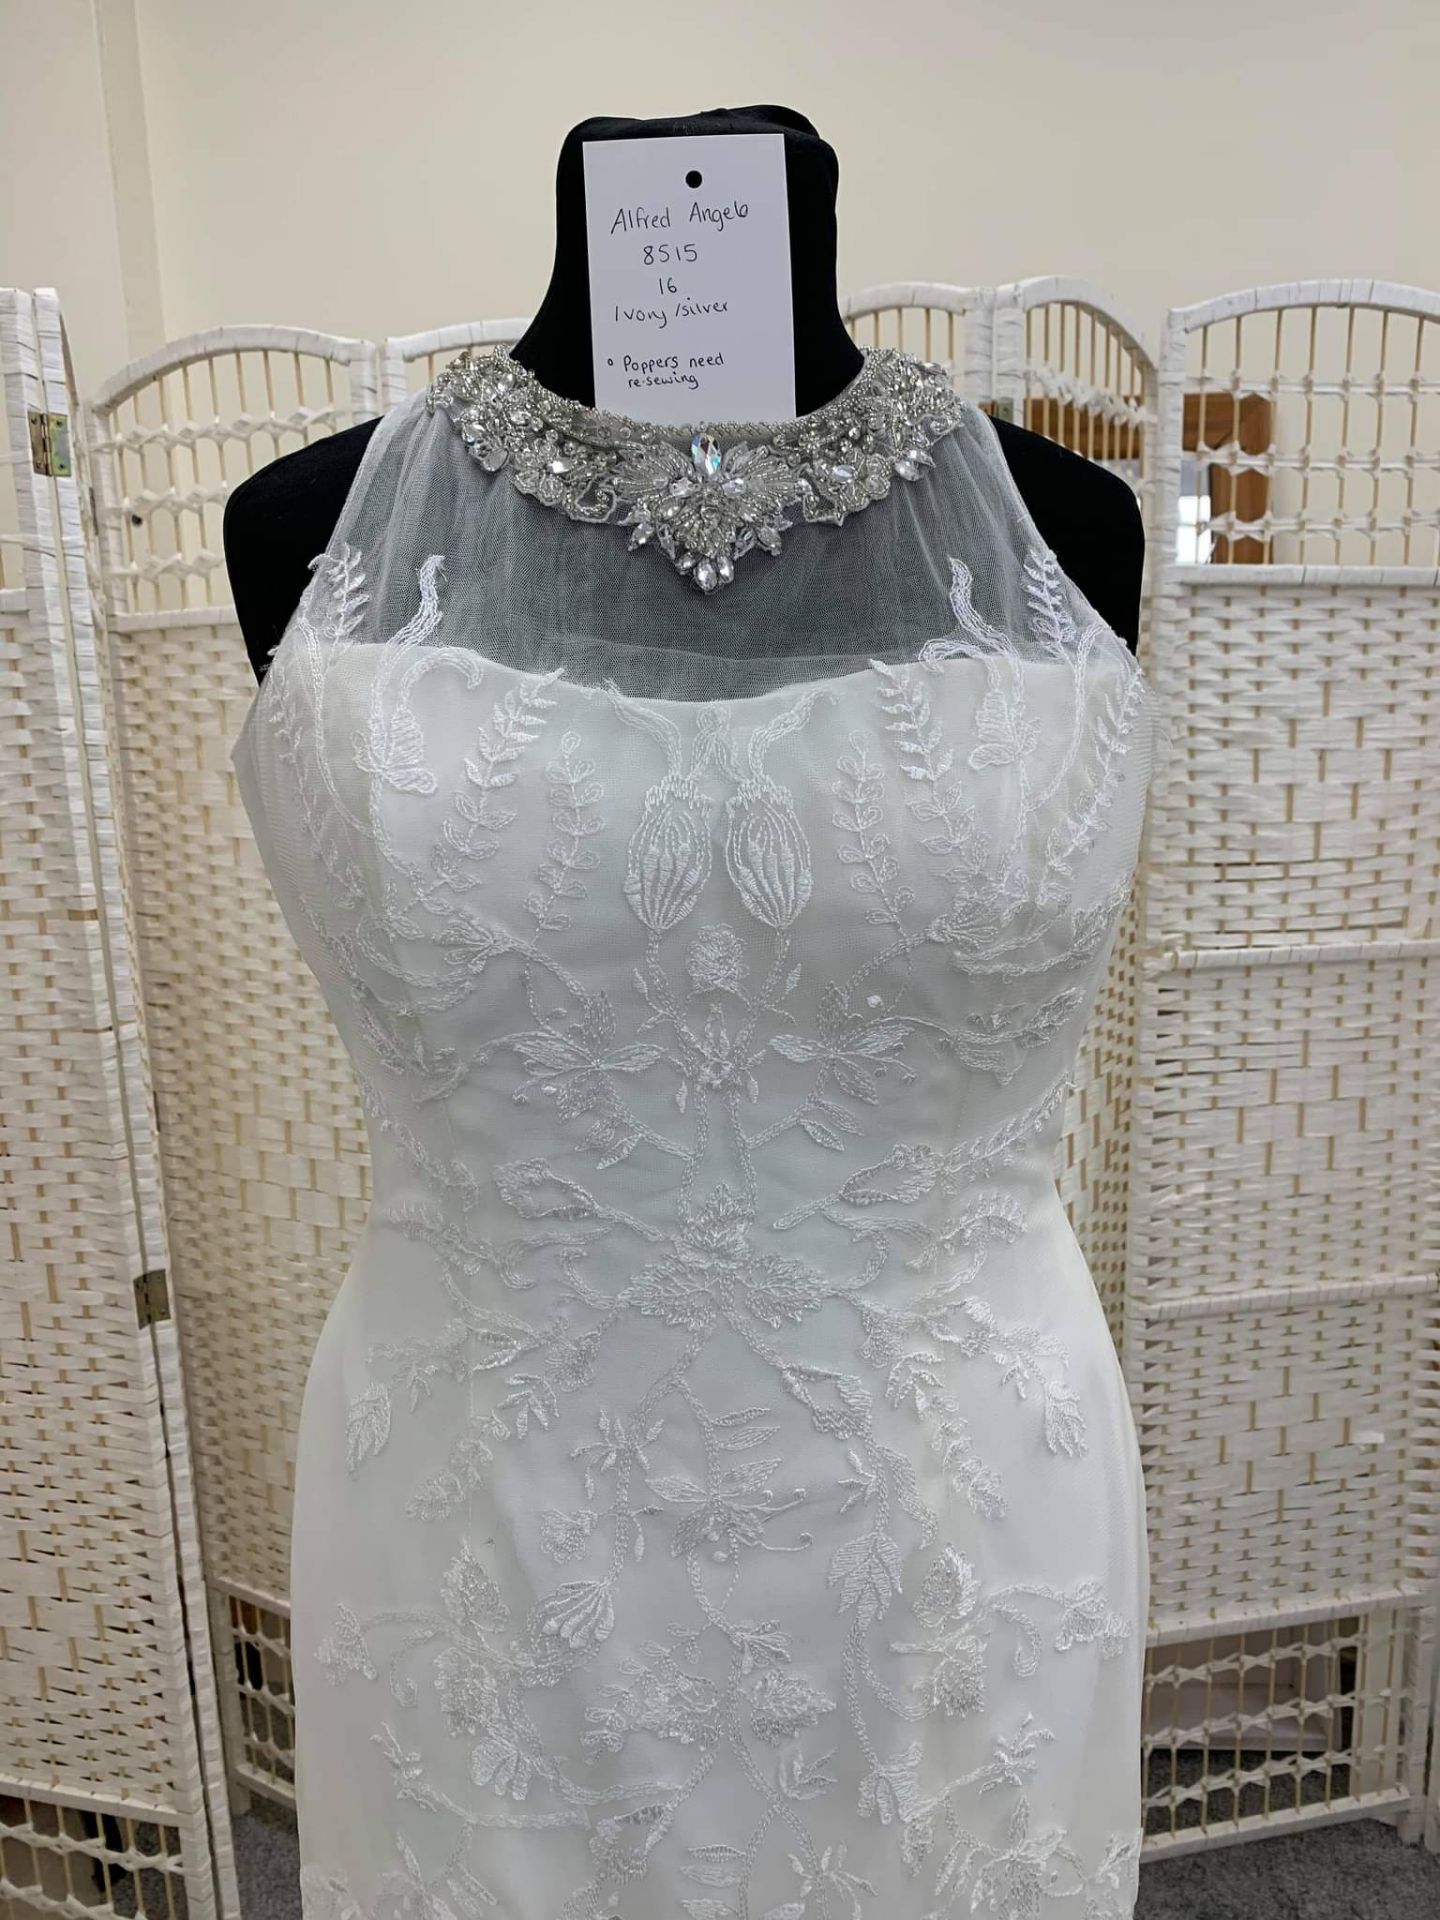 Alfred Angelo Wedding Dress UK 8516 Size 16 - Image 3 of 3